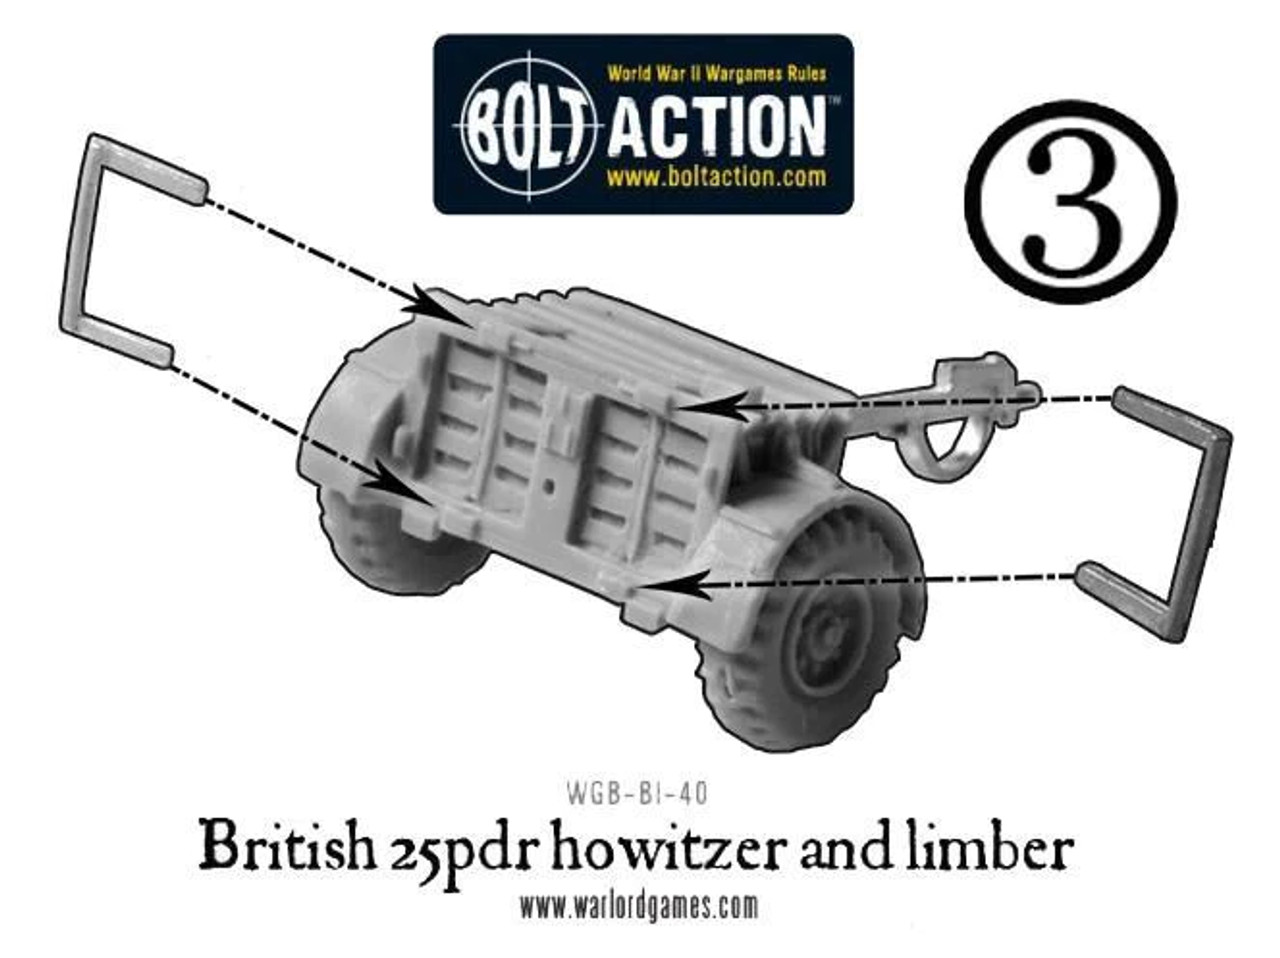 British 25 pdr Howitzer & Limber - WGB-BI-40